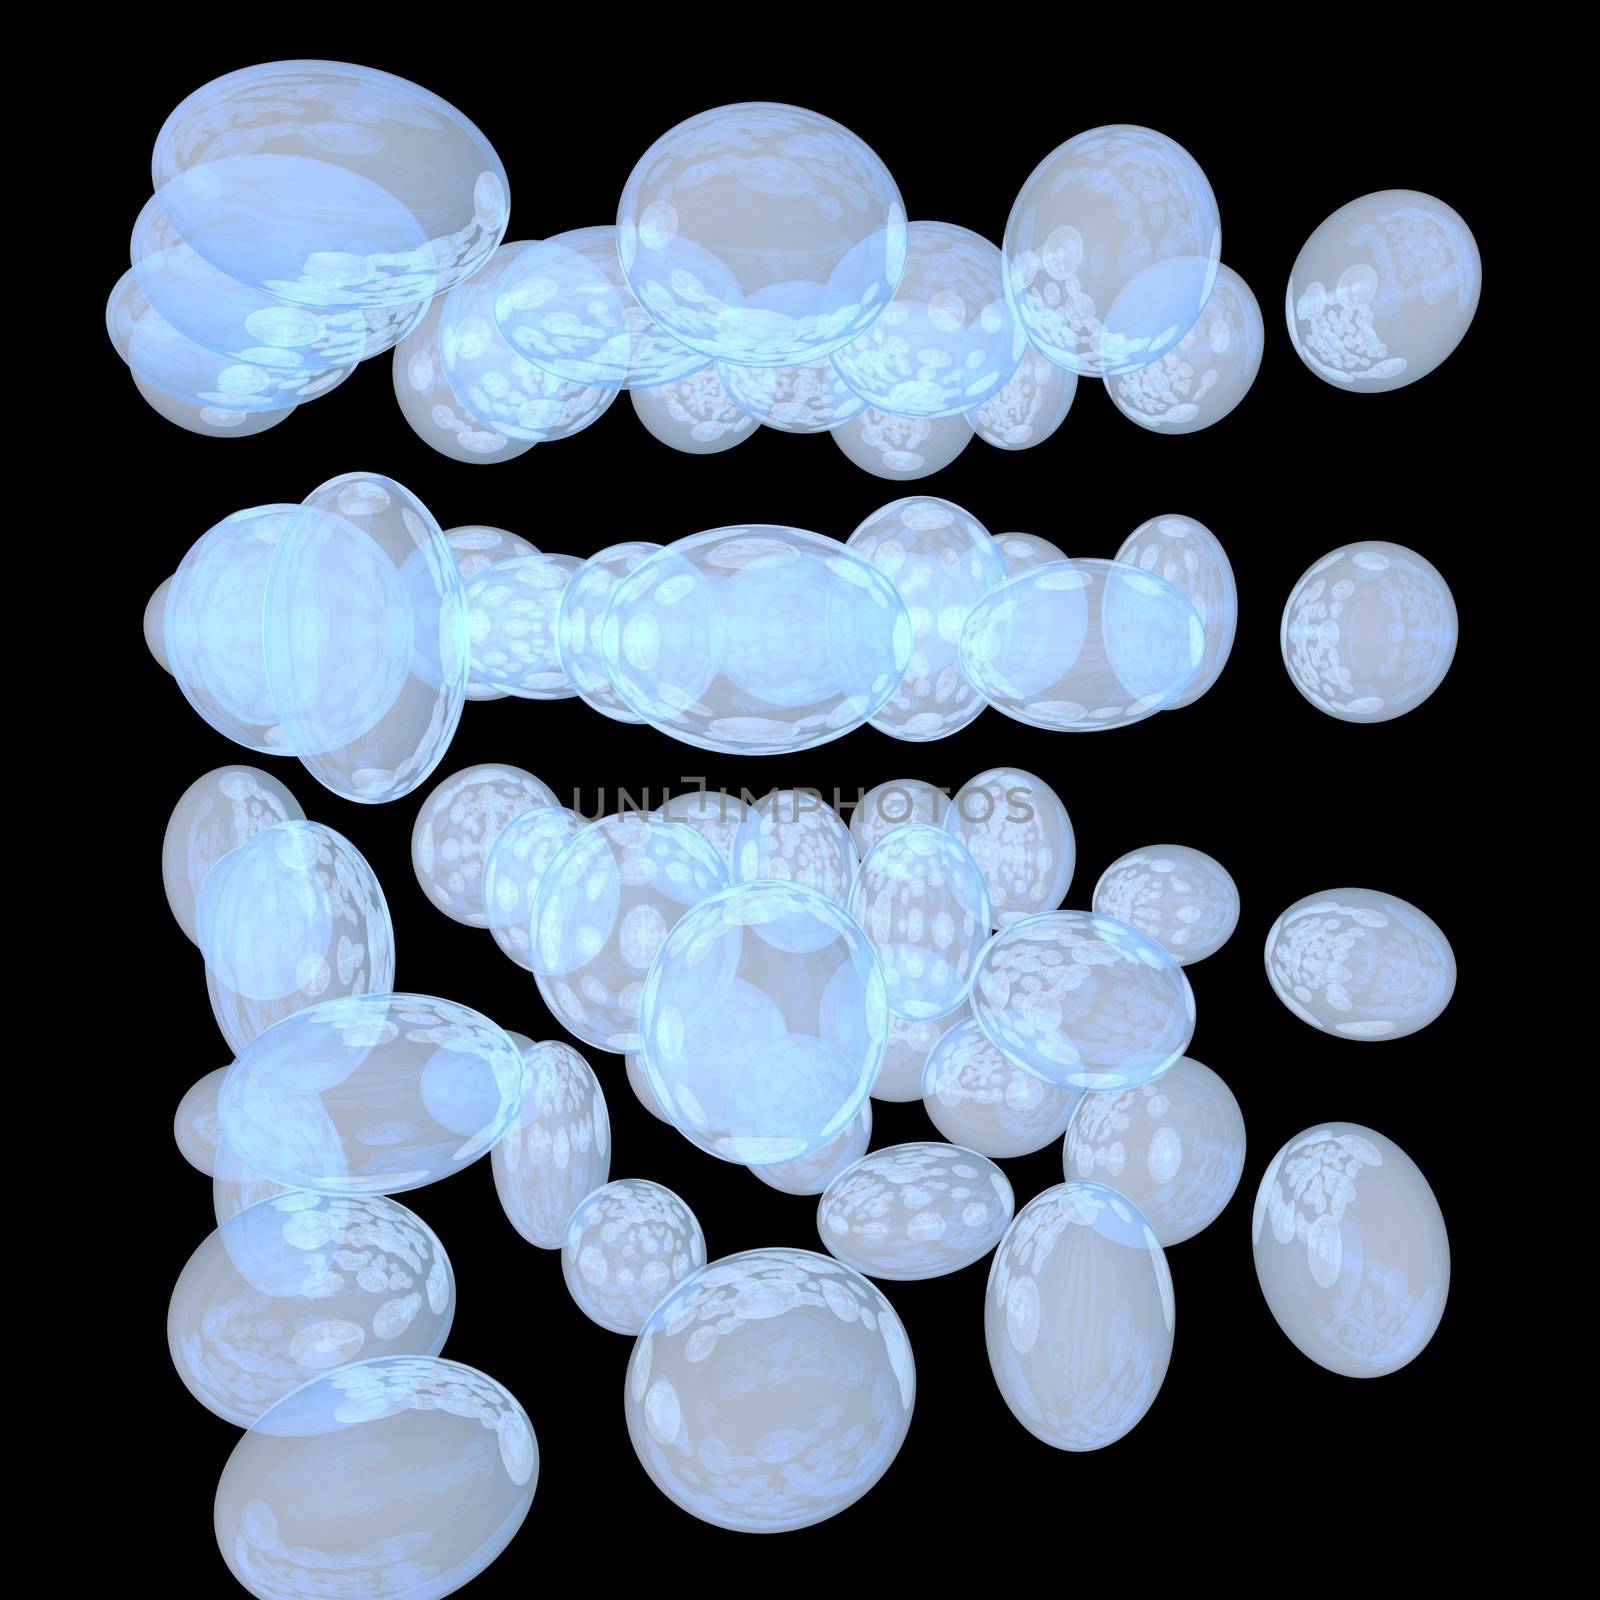 Blue bubbles over black background, 3d render